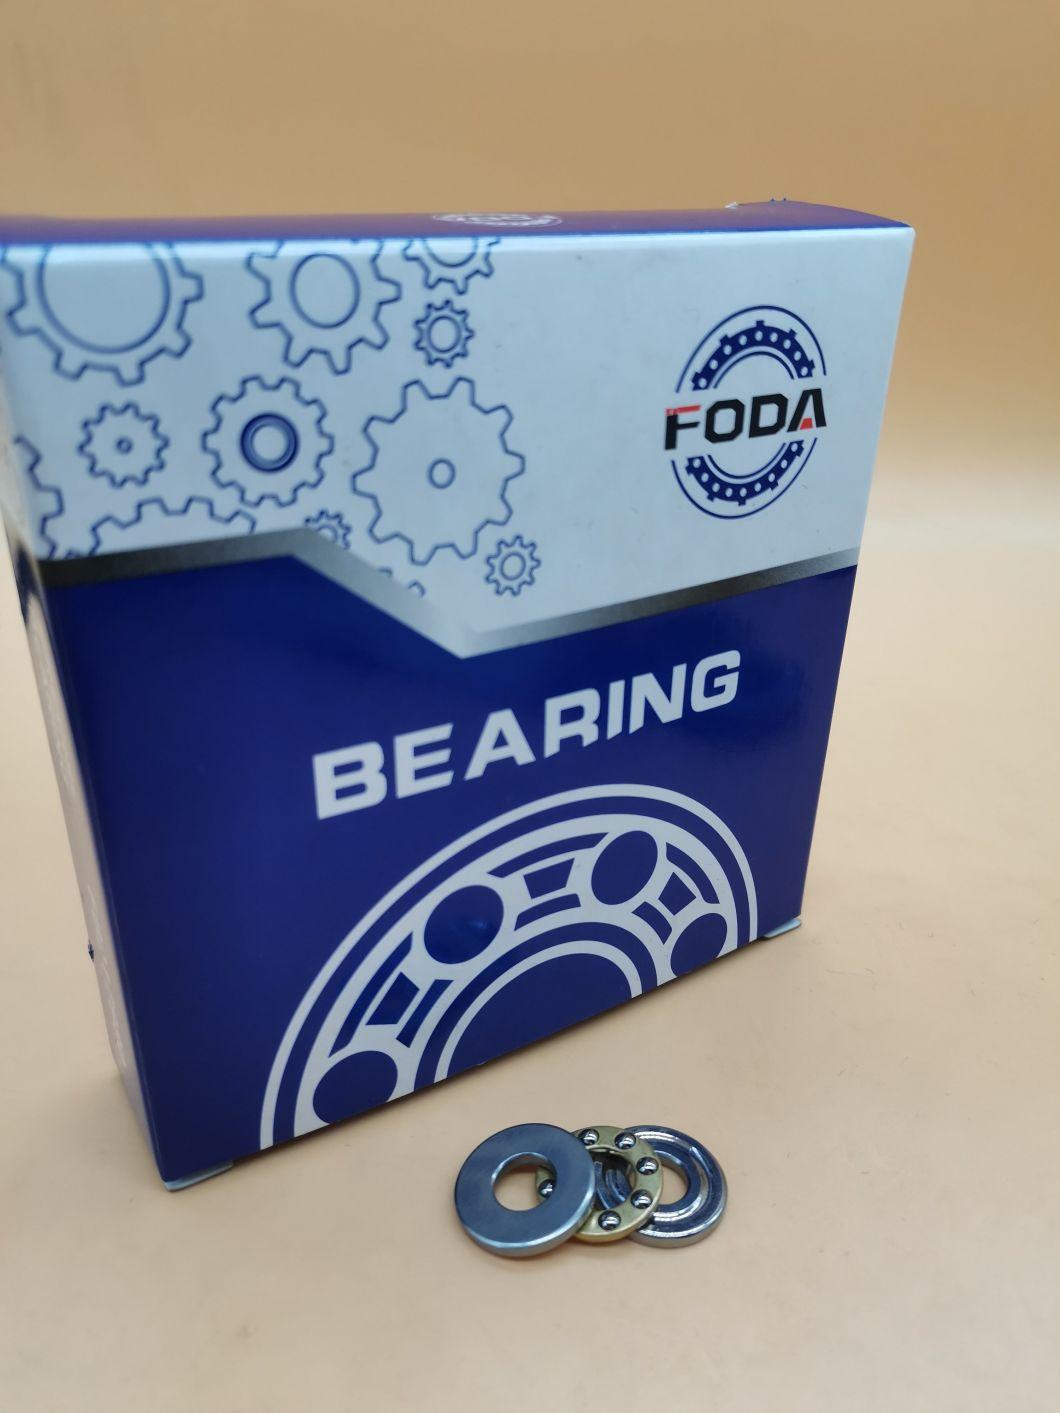 Foda Factory Supplies Big Thrust Ball Bearings/Low Speed Reducer/Foda High Quality Bearings Instead of Bearings/Thrust Ball Bearings of 51322m